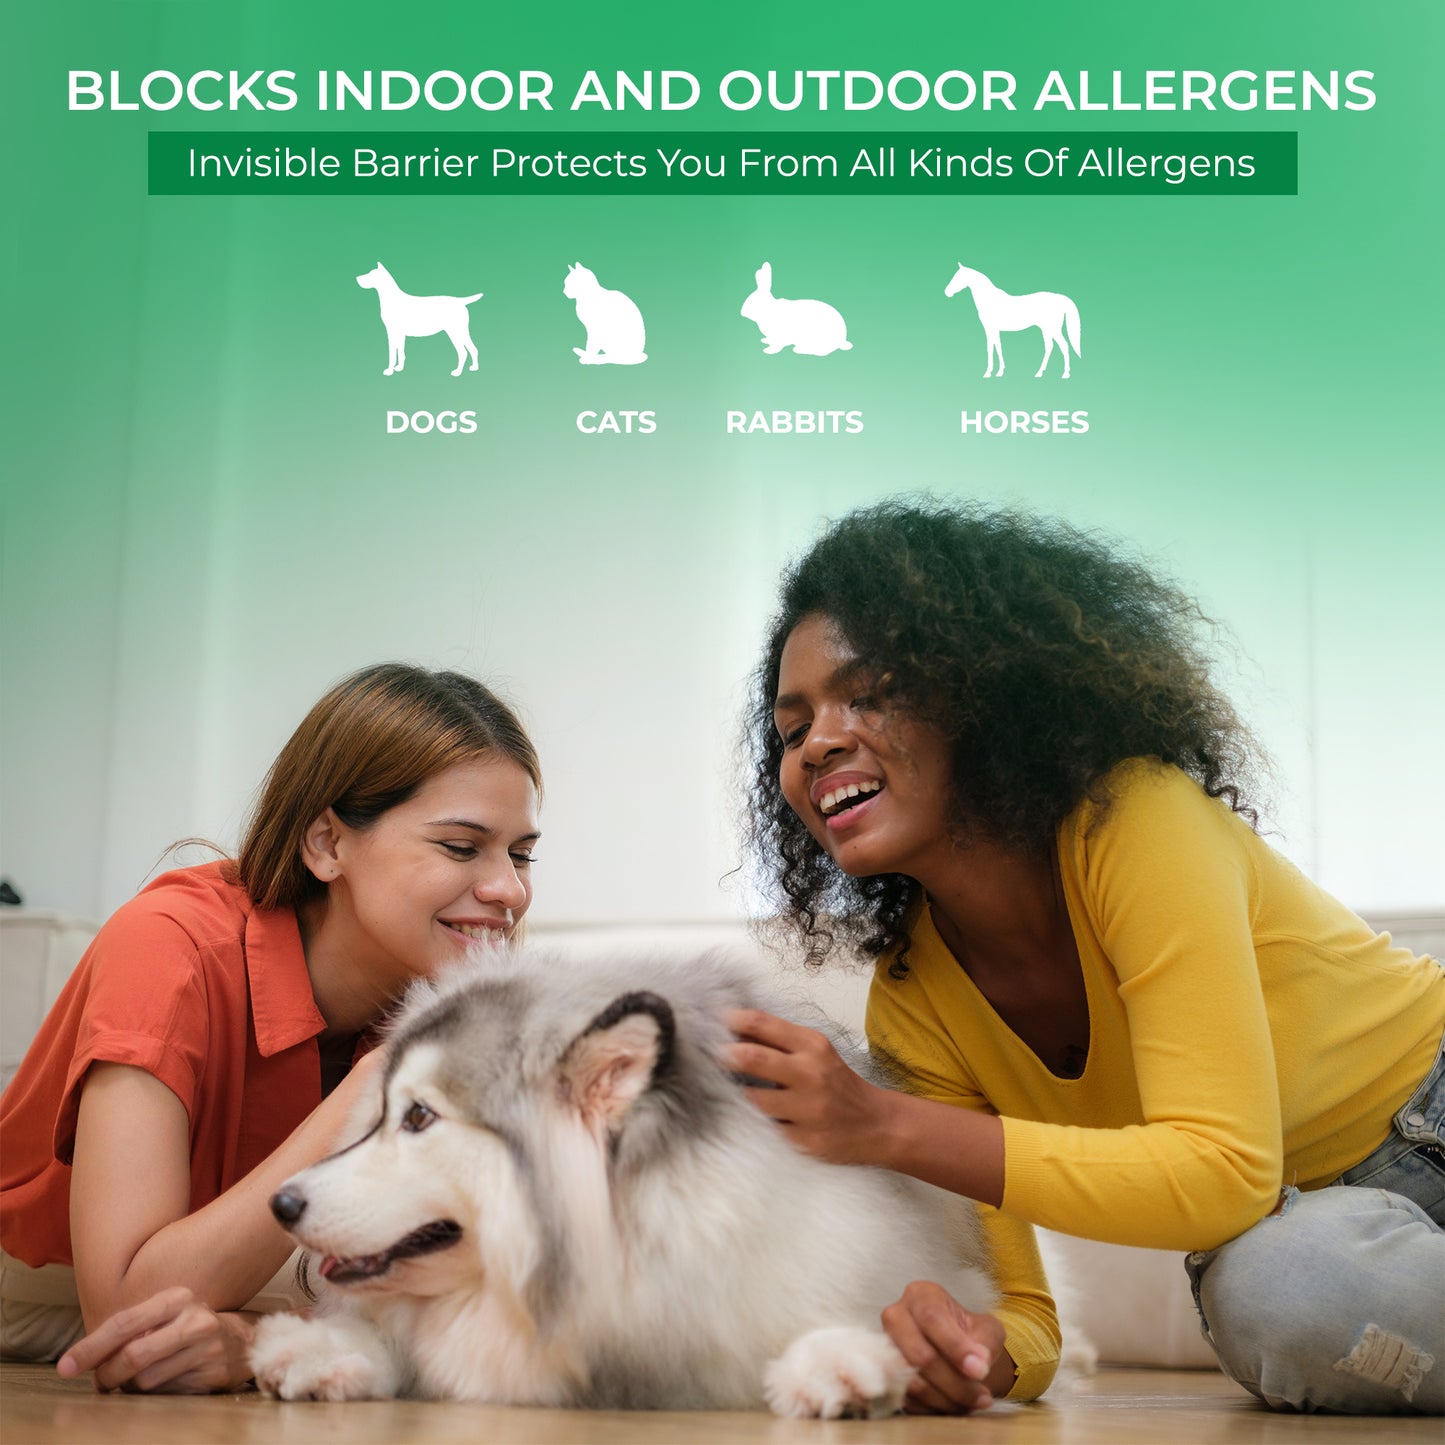 NasalGuard For Pet Lovers - Allergy Relief Gel, Drug-Free, Cool Menthol, 3g Tube